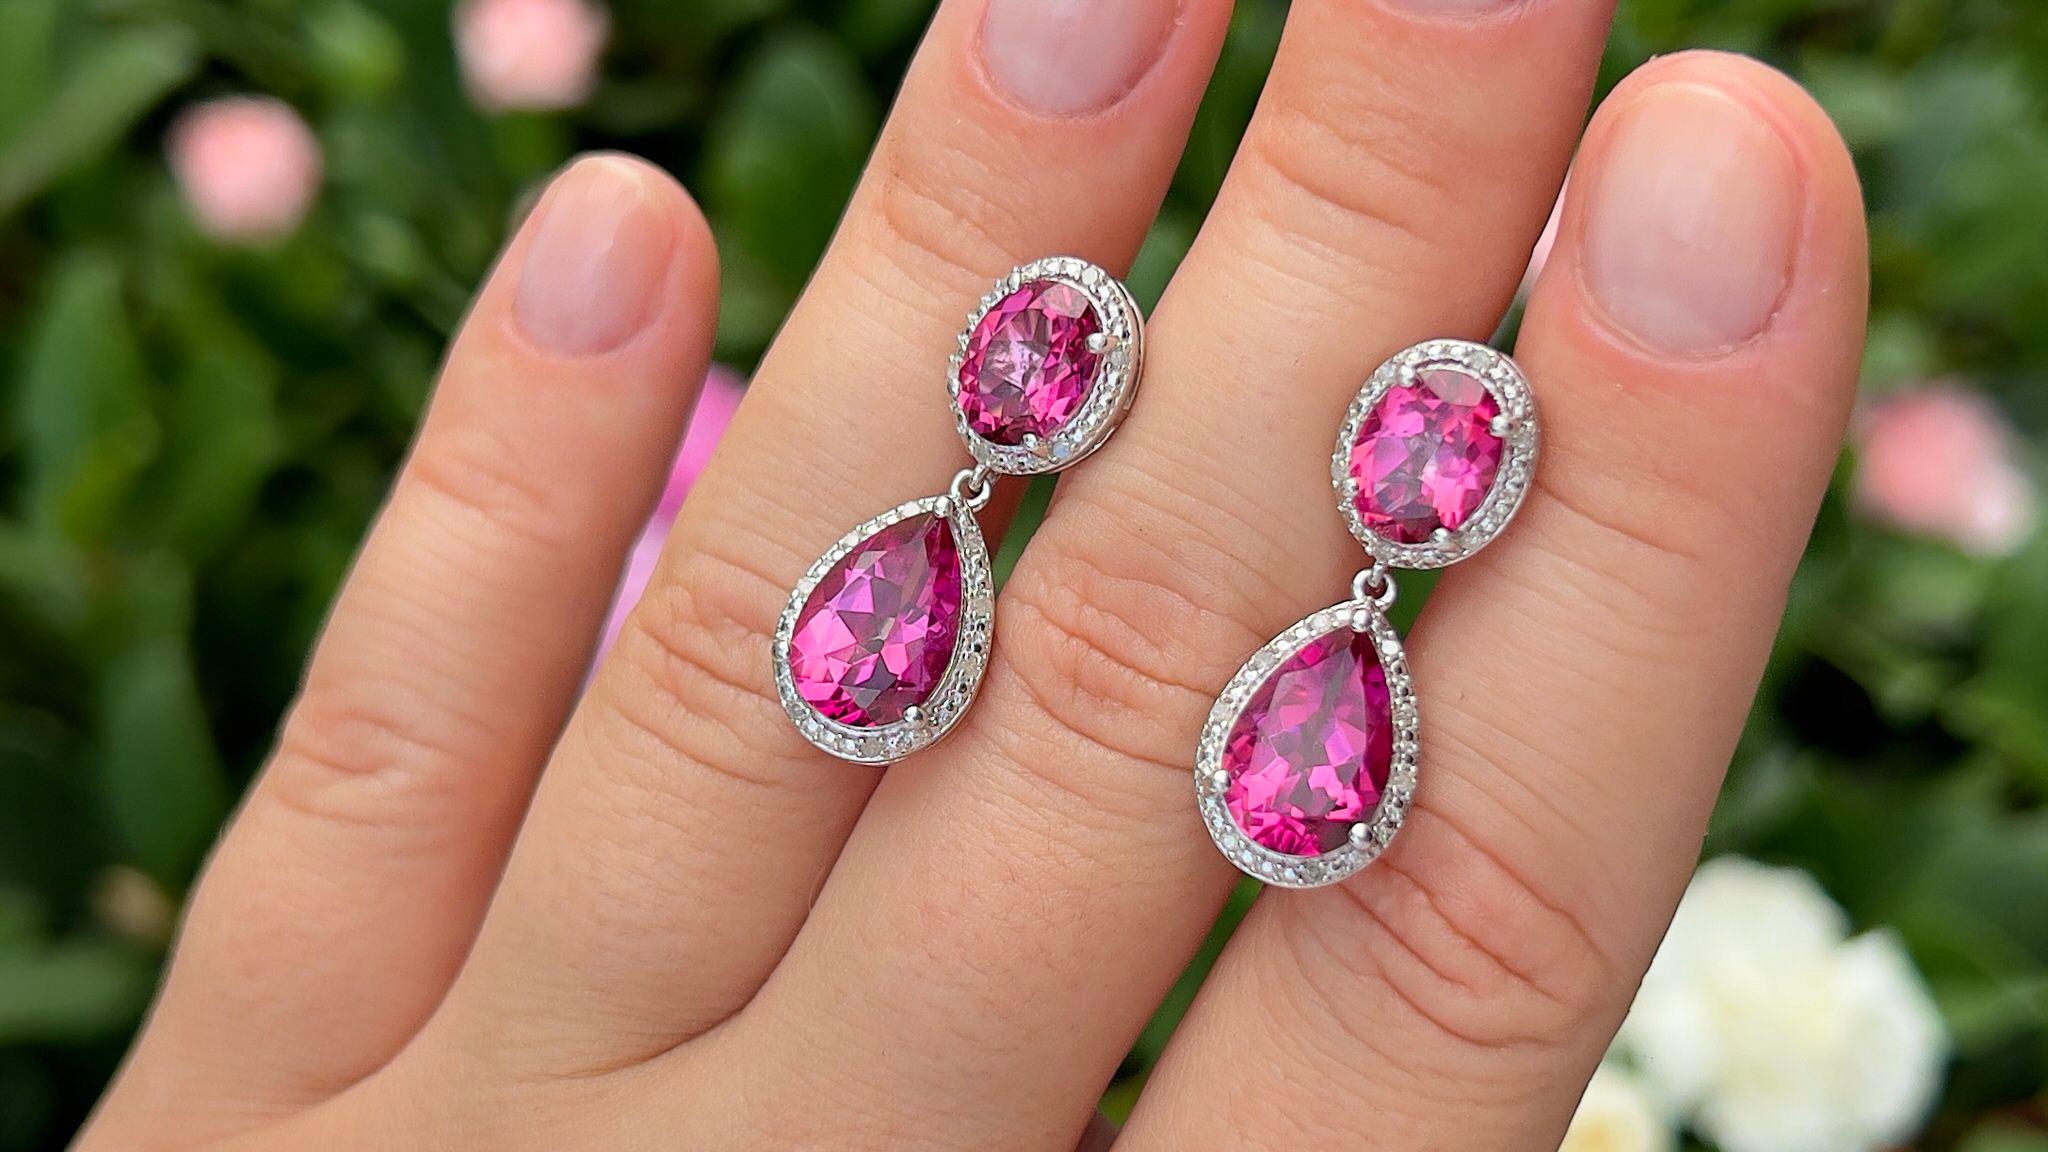 Women's or Men's Hot Pink Topaz Earrings Diamond Setting 11.35 Carats Total